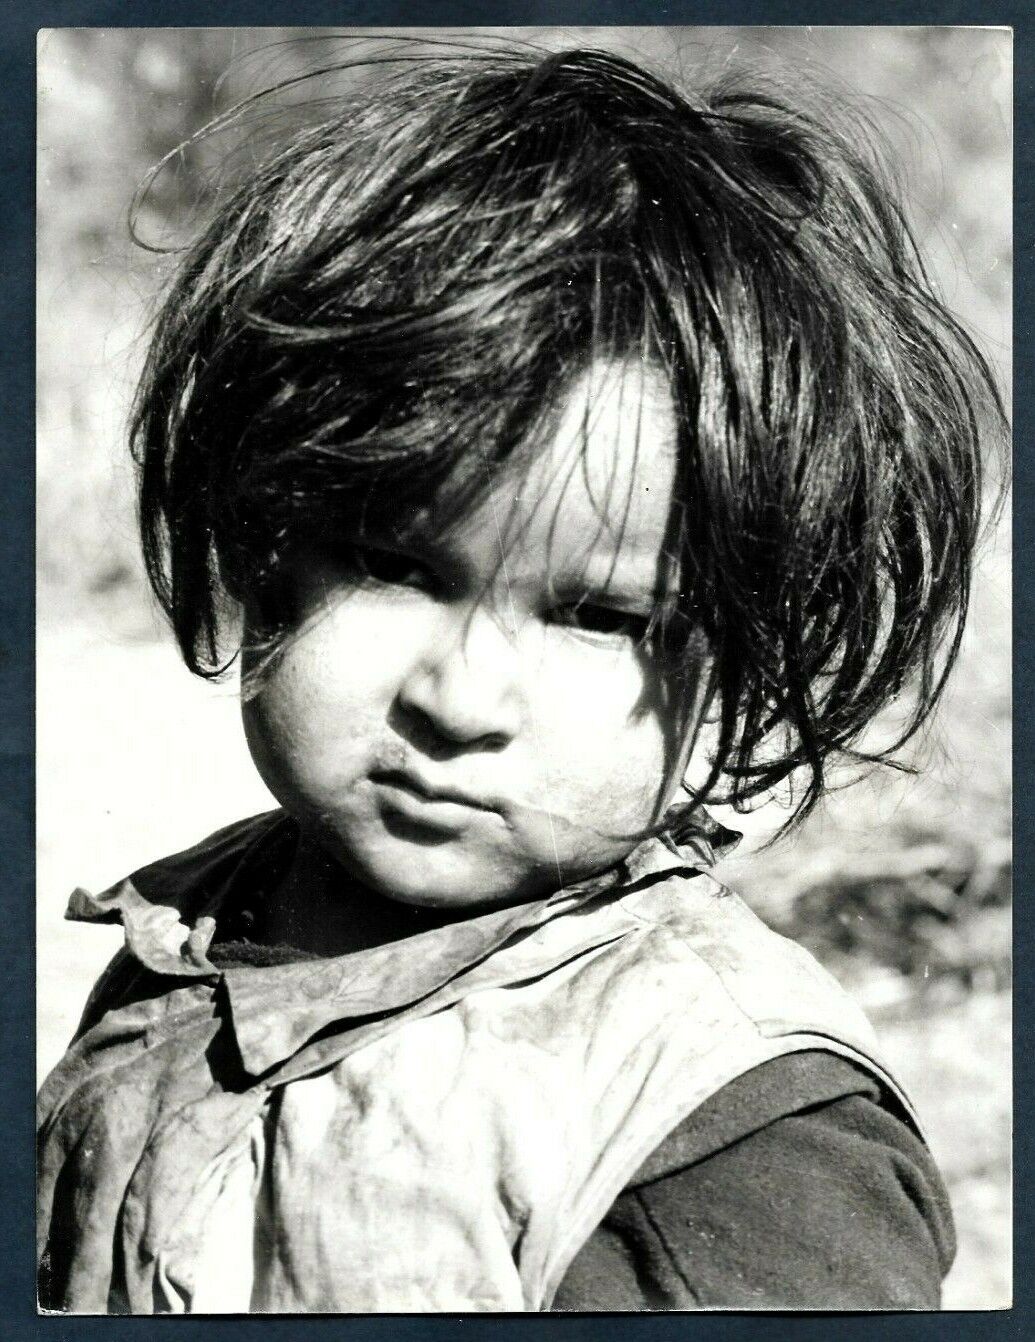 FLEEING ARGELIA WAR TURMOIL REFUGEE ARGELIAN CHILD TUNIS 1963 PRESS Photo Y 204